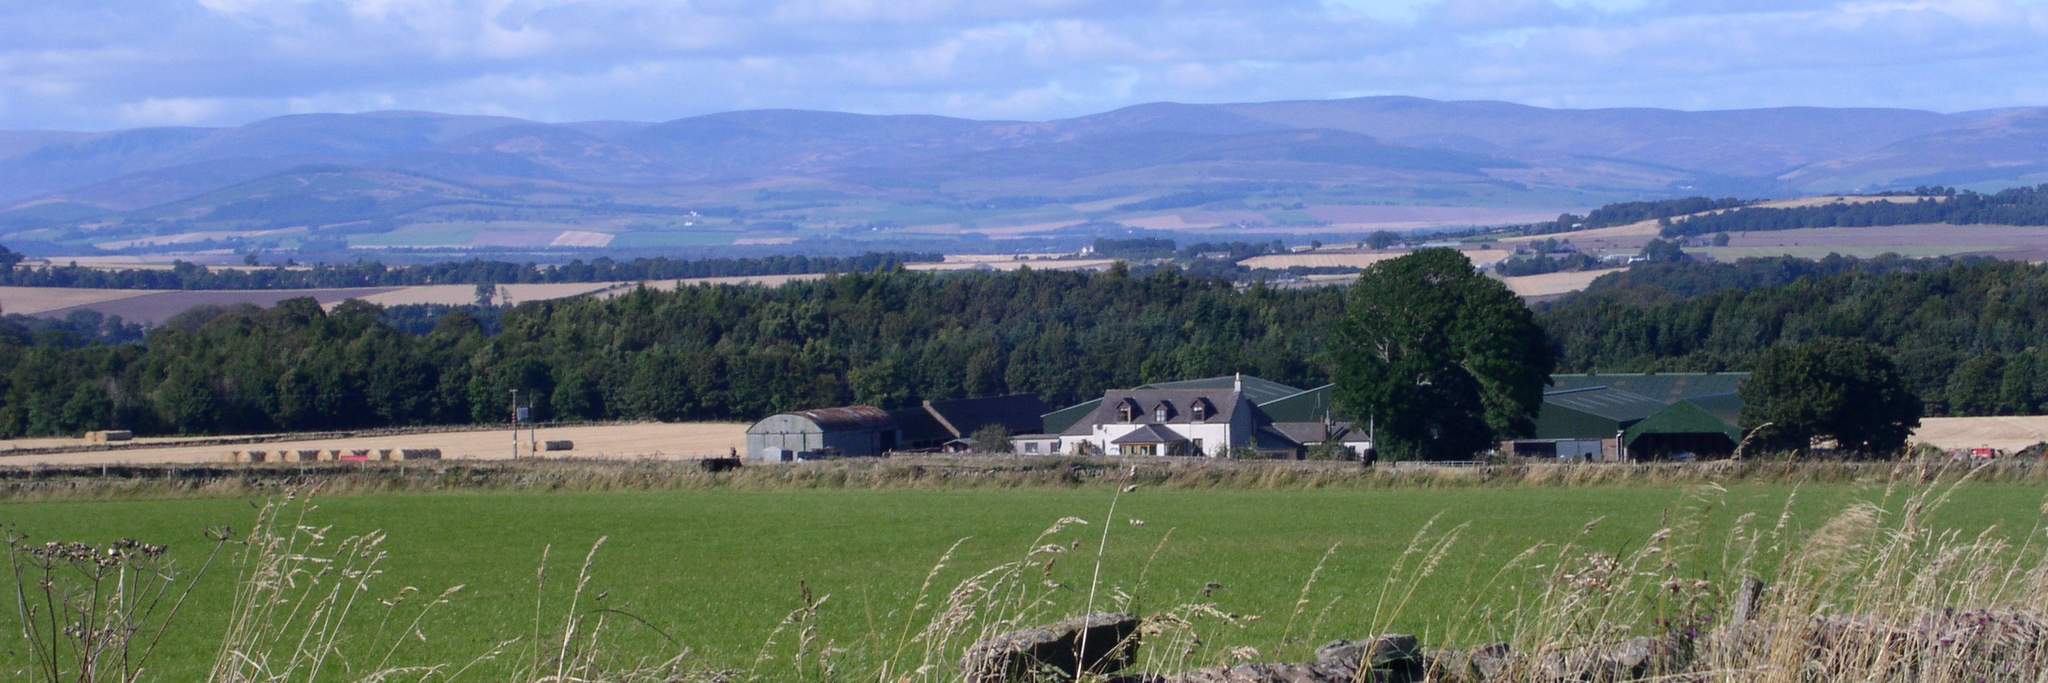 Newton Farm Holidays, Scotland